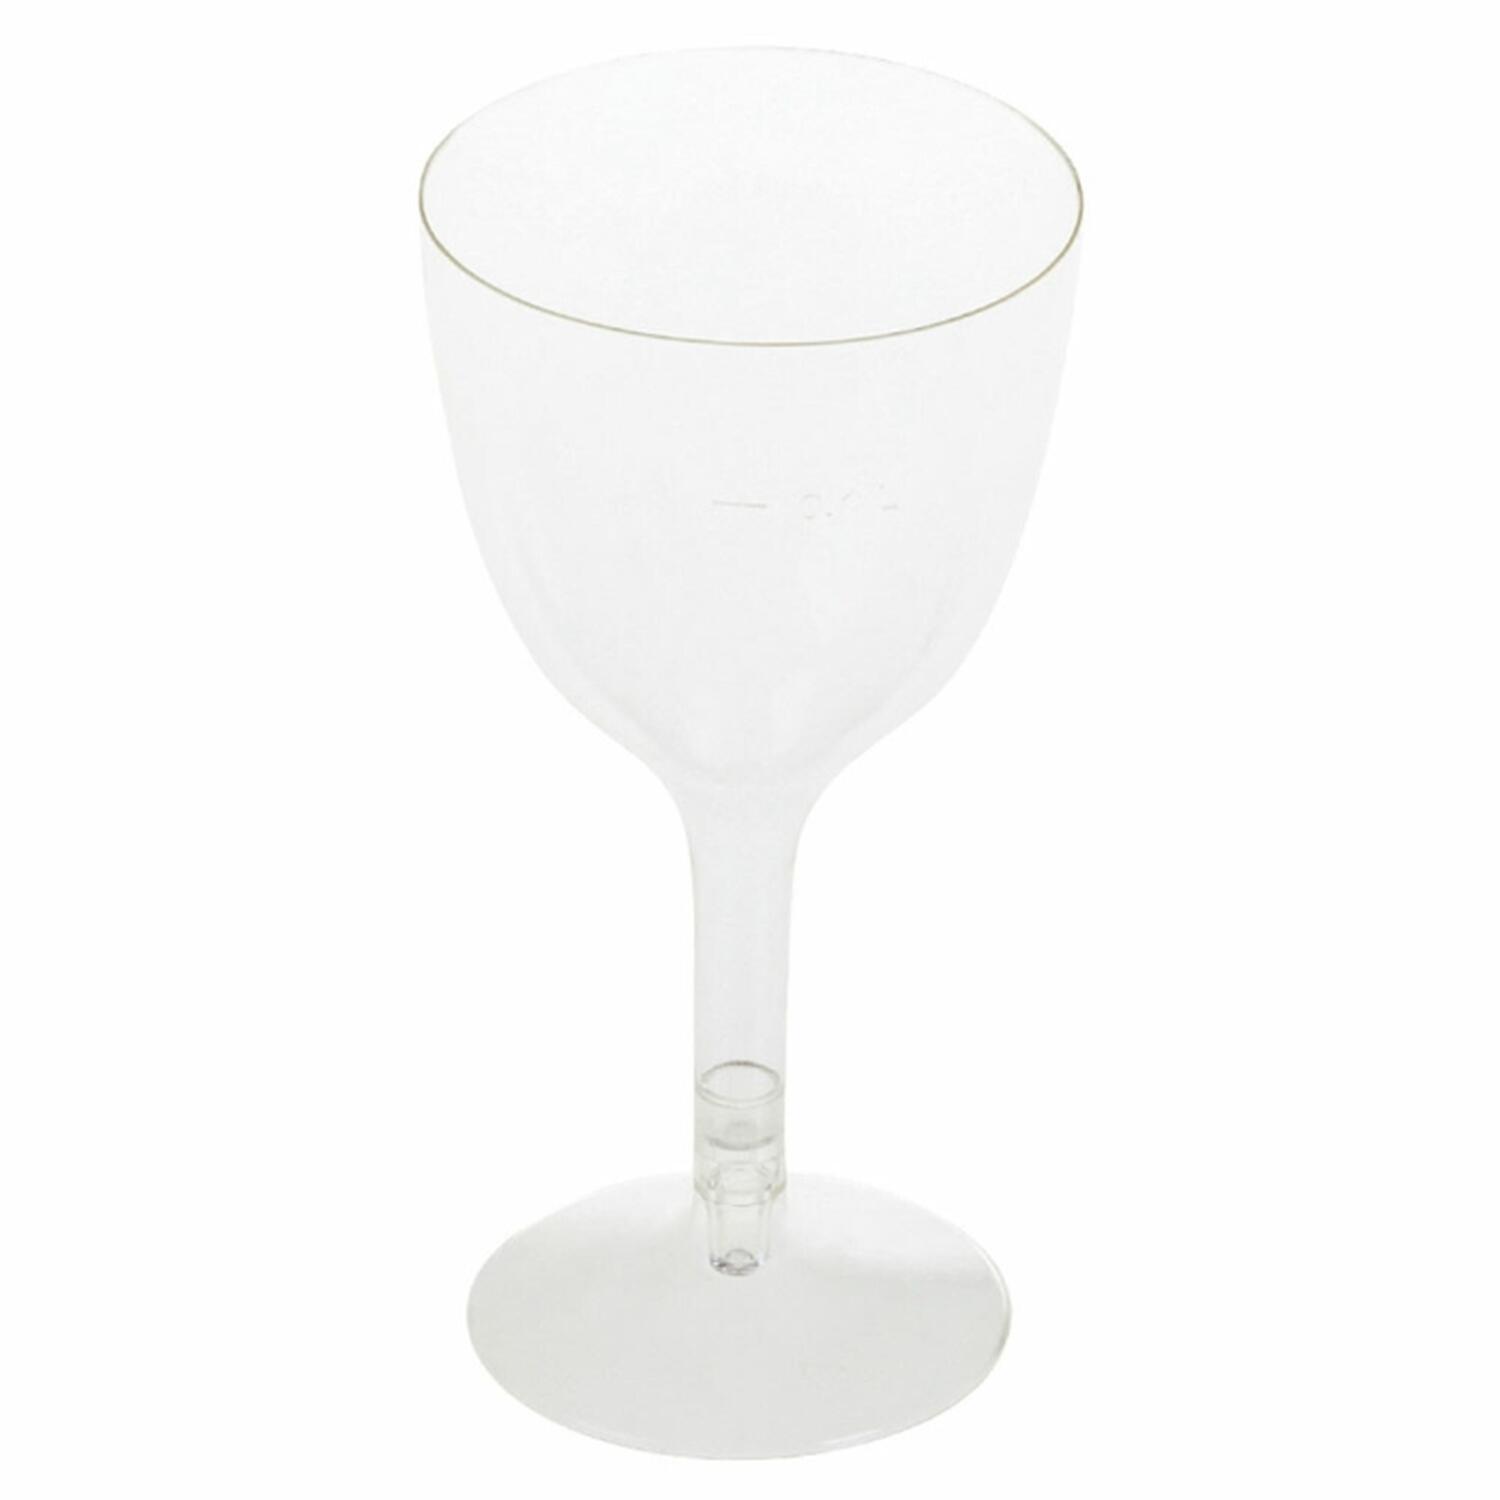 BIO Weinglas klar, 2-teilig, 100 ml, Ø7x11+3 cm, aus Biokunststoff (PLA) 21 Stk.